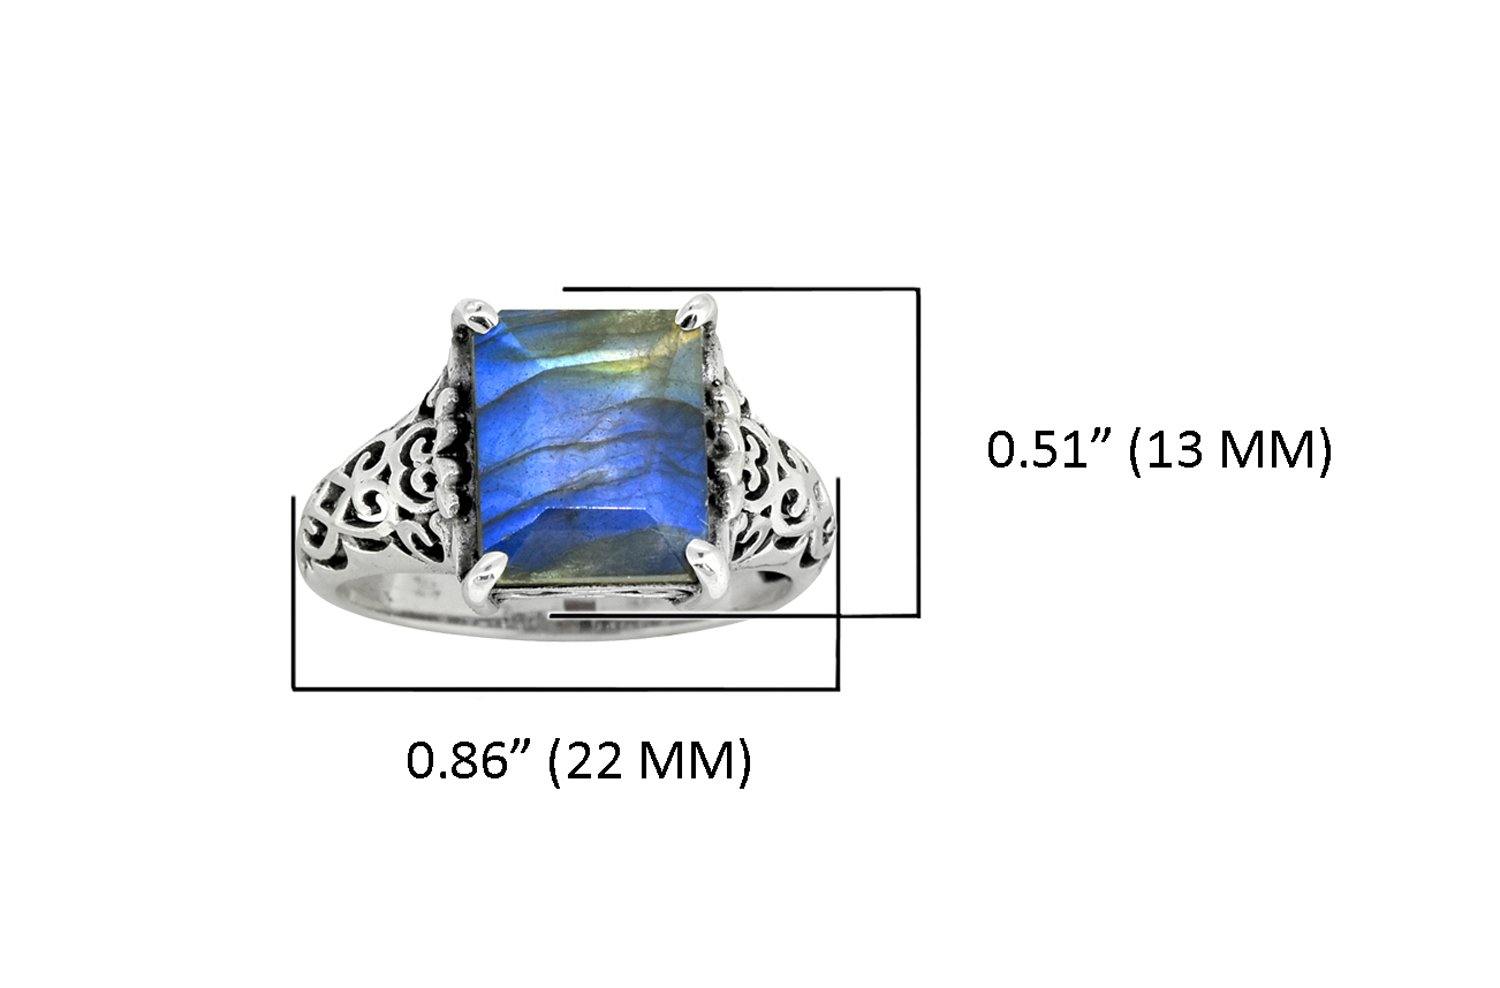 Labradorite Ring Solid 925 Sterling Silver Gemstone Jewelry - YoTreasure